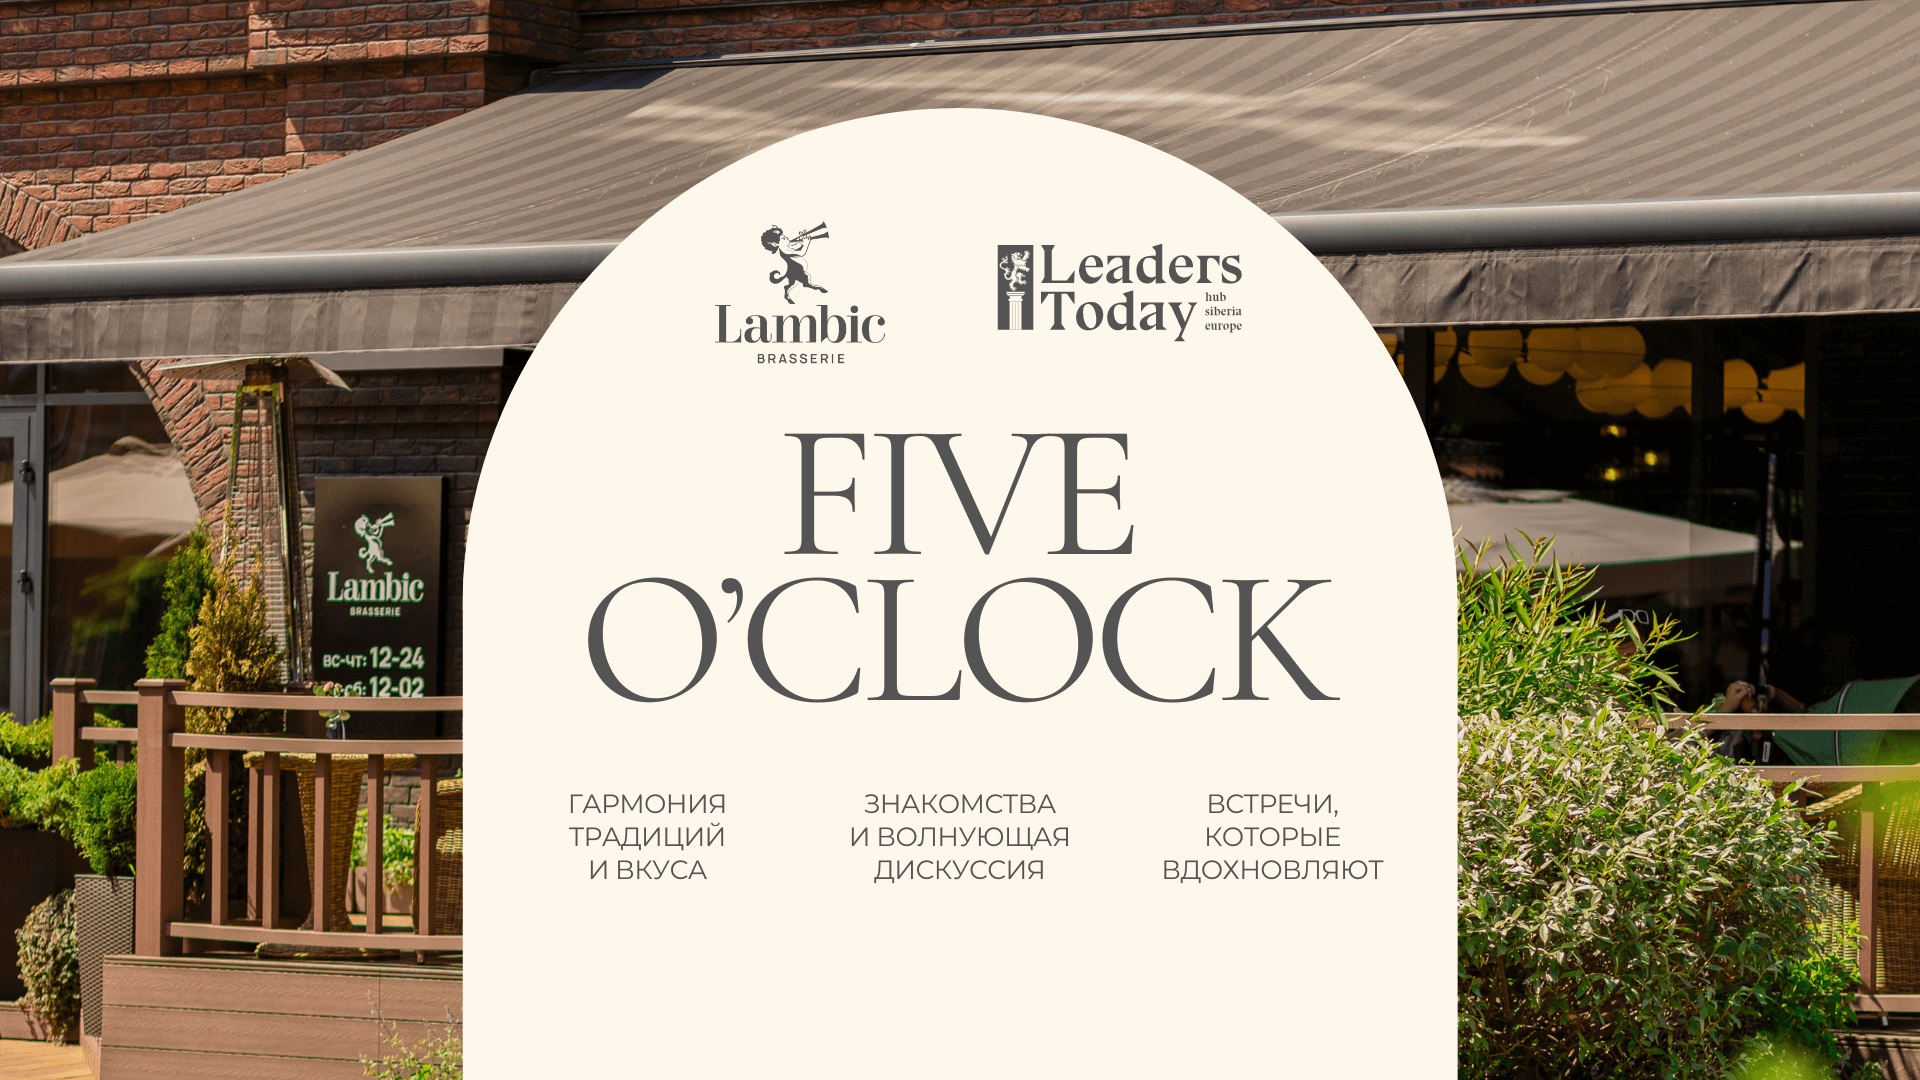 23 июня в ресторане Lambic прошла встреча FIVE O’CLOCK от Leaders Today с писателем Виктором Стасевичем